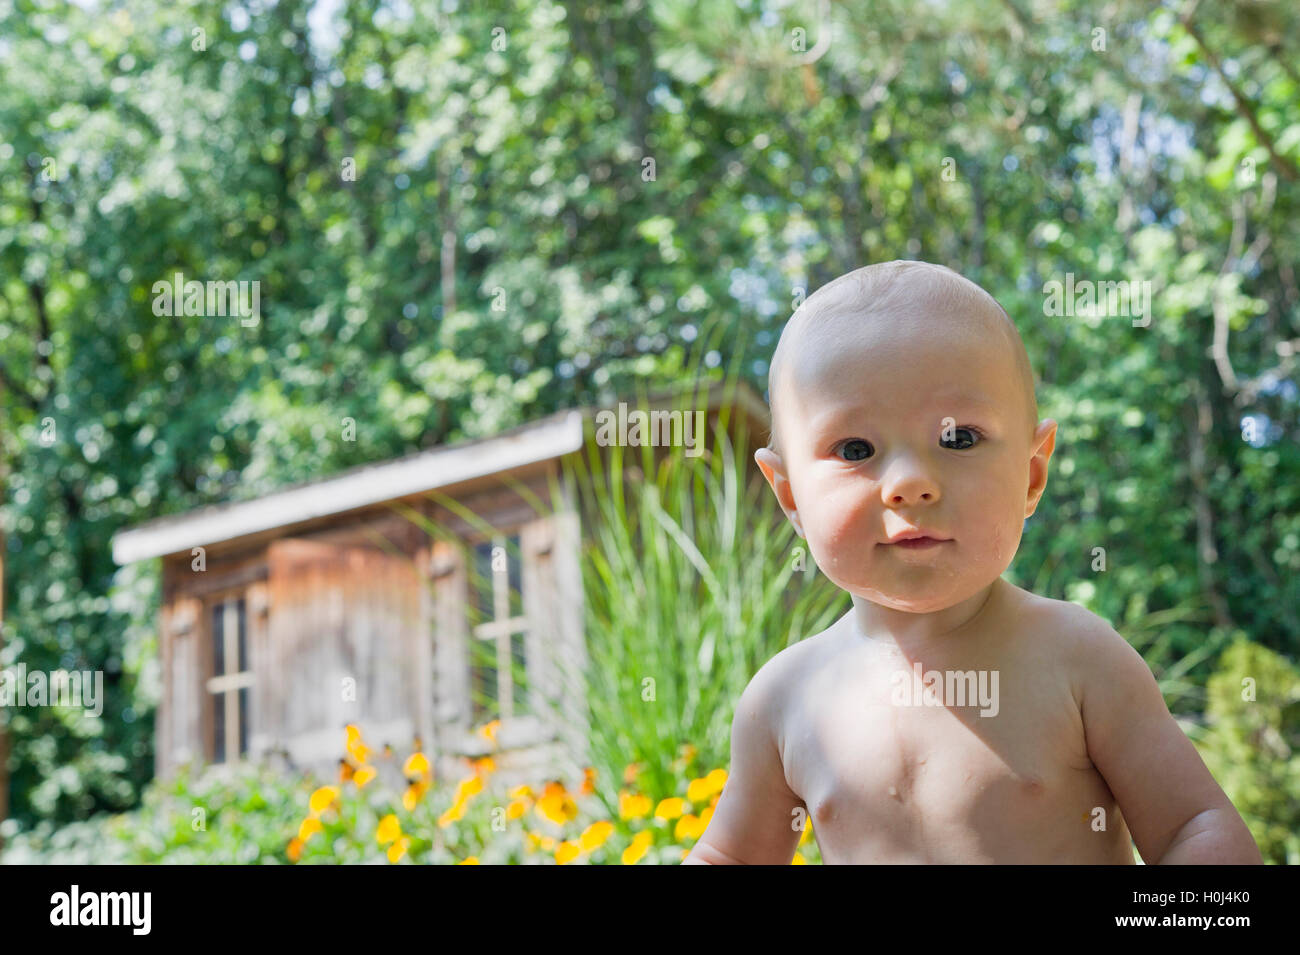 infant boy bathing in a backyard Stock Photo